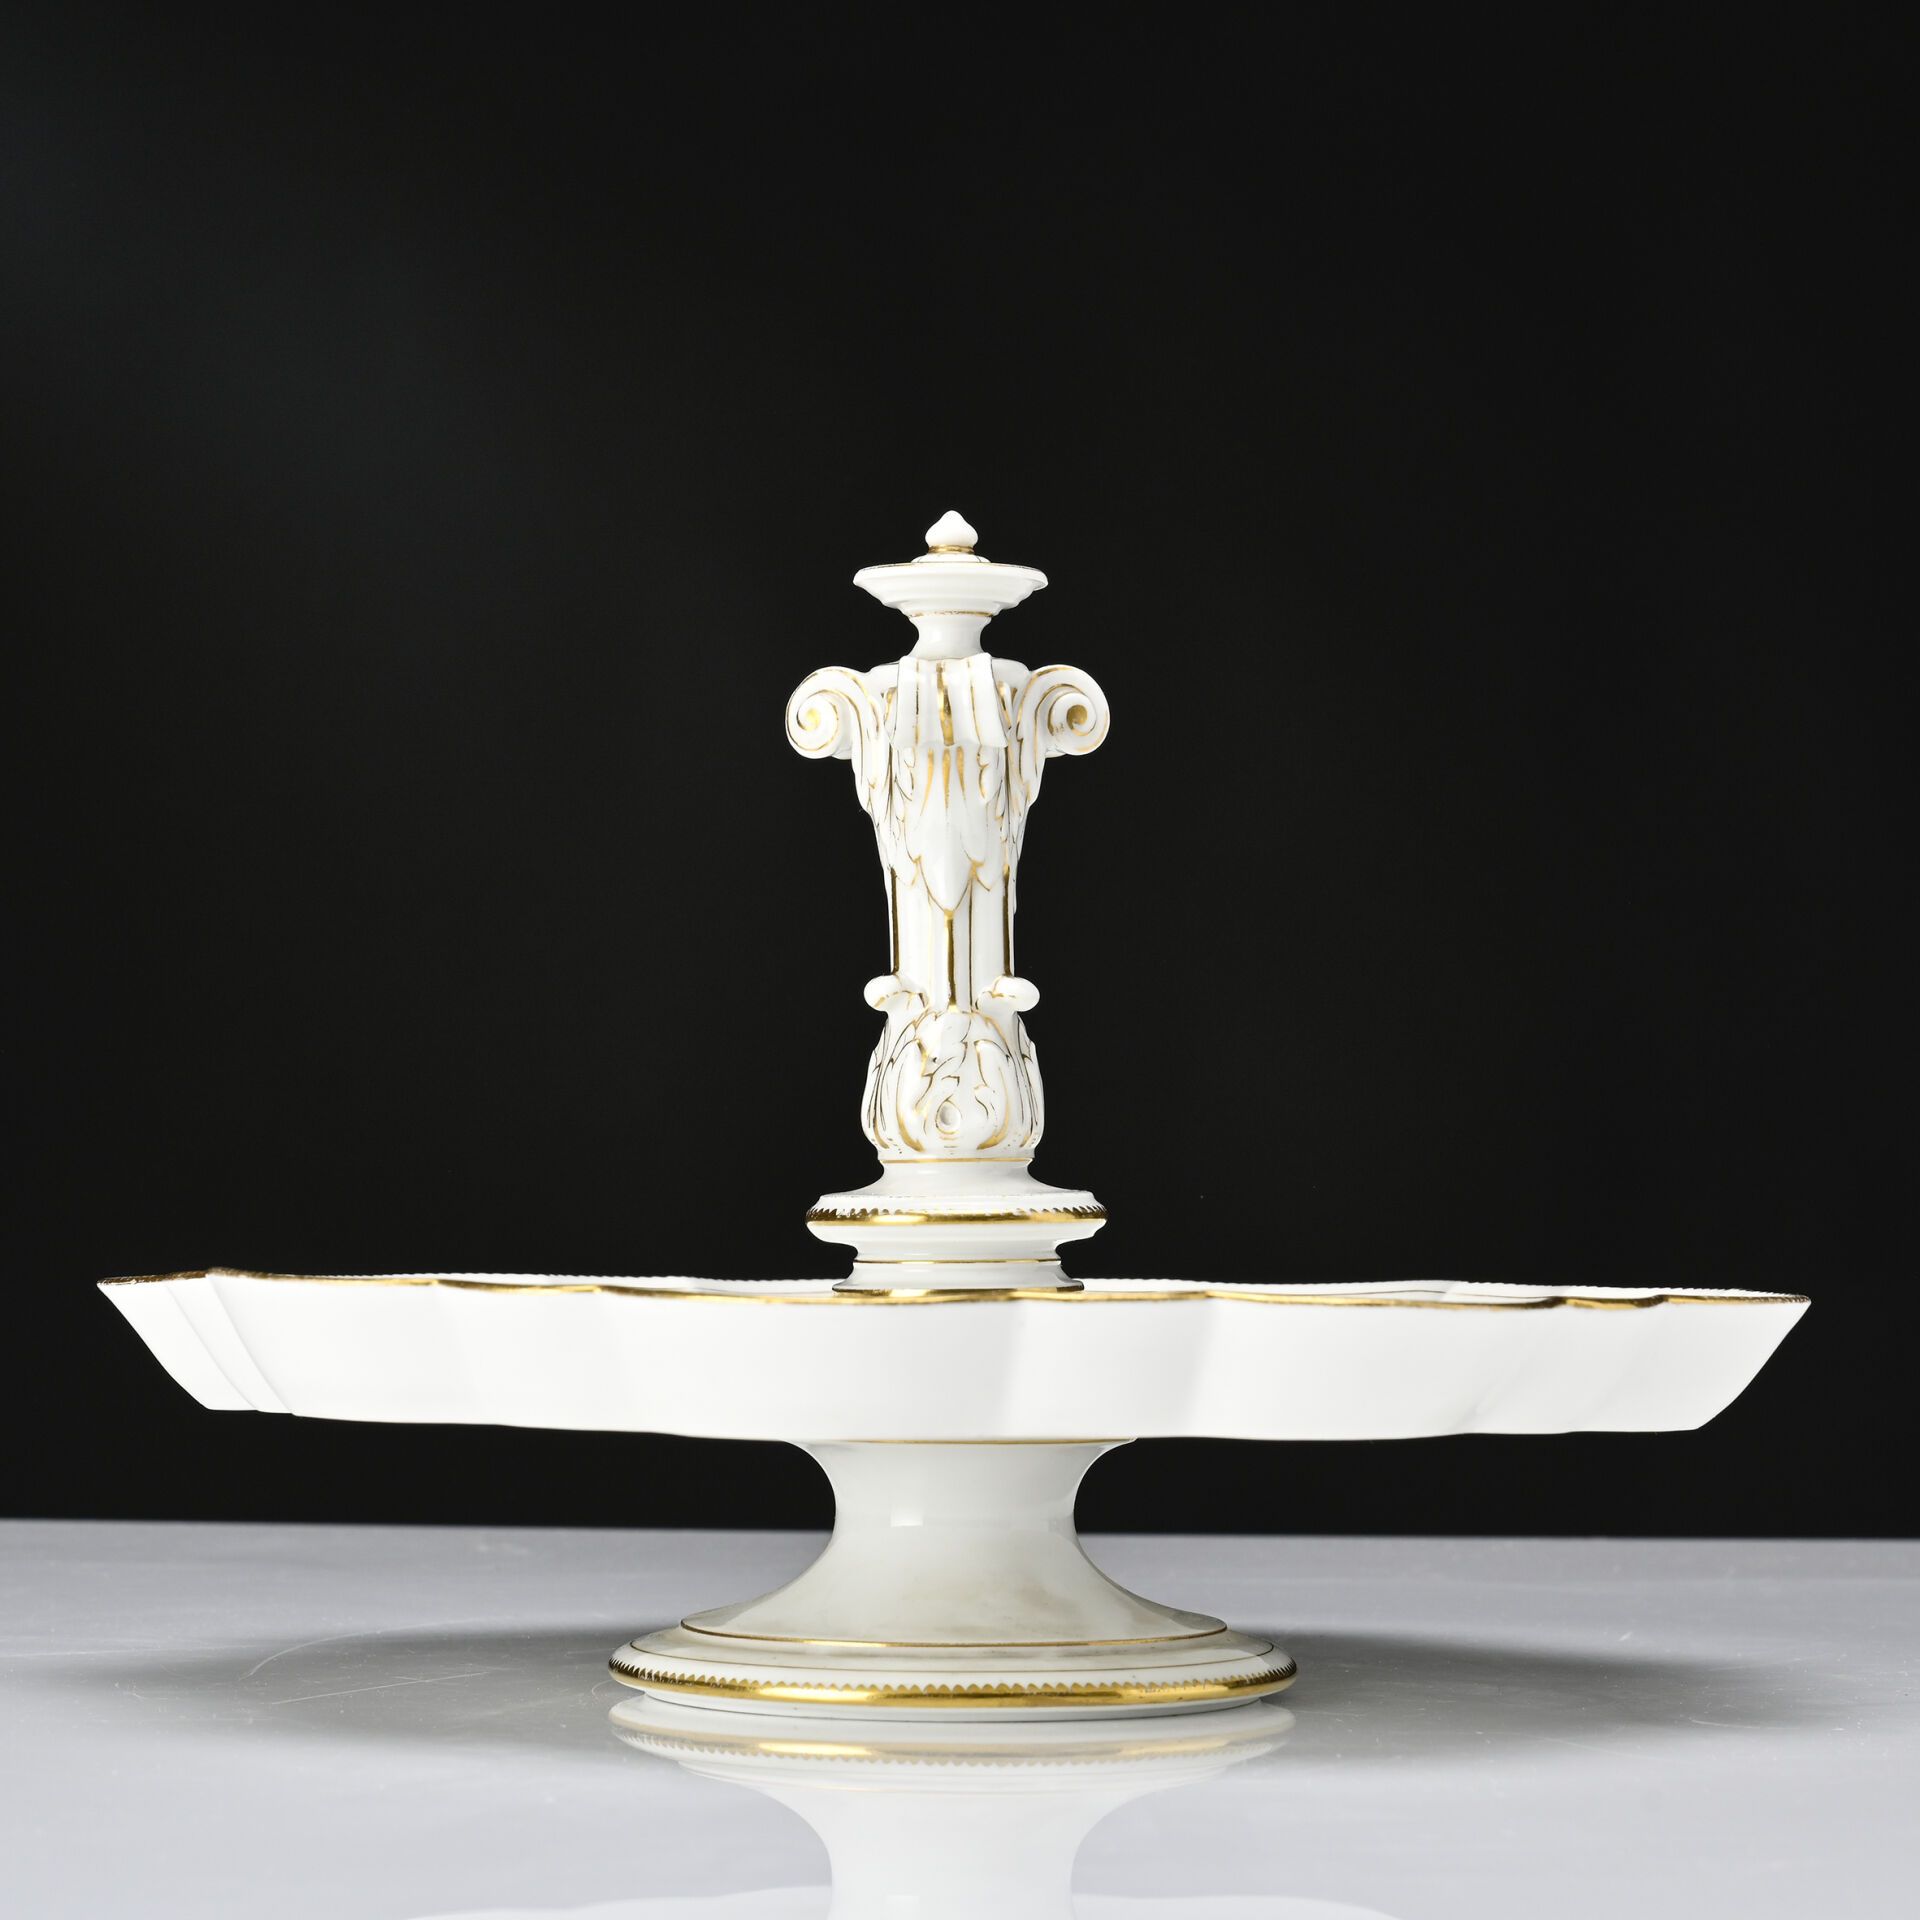 Null 白色和镀金巴黎瓷器奶油色餐具构成中心装饰。
包括九个有盖壶和一个展示架 
拿破仑三世时期
高：23 - 宽：29 厘米